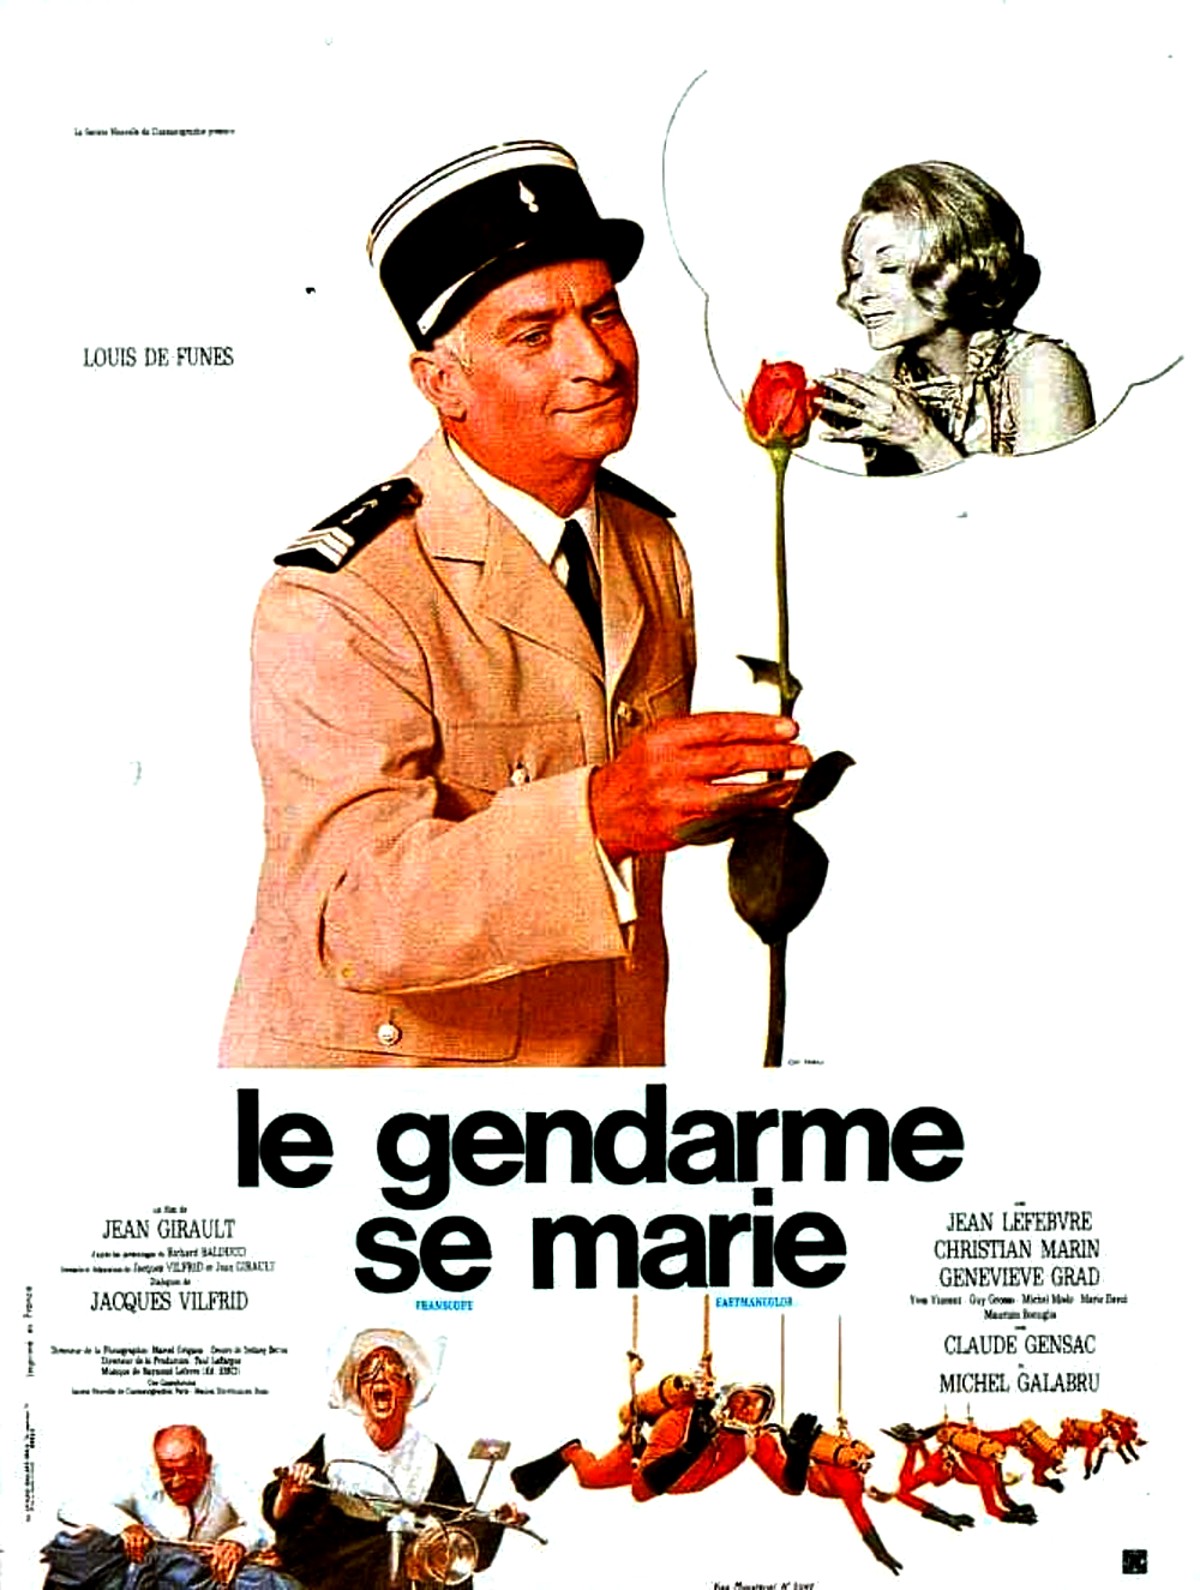 Le gendarme se marie (1968) Jean Girault - Le gendarme se marie (20.05.1968 / 30.08.1968)